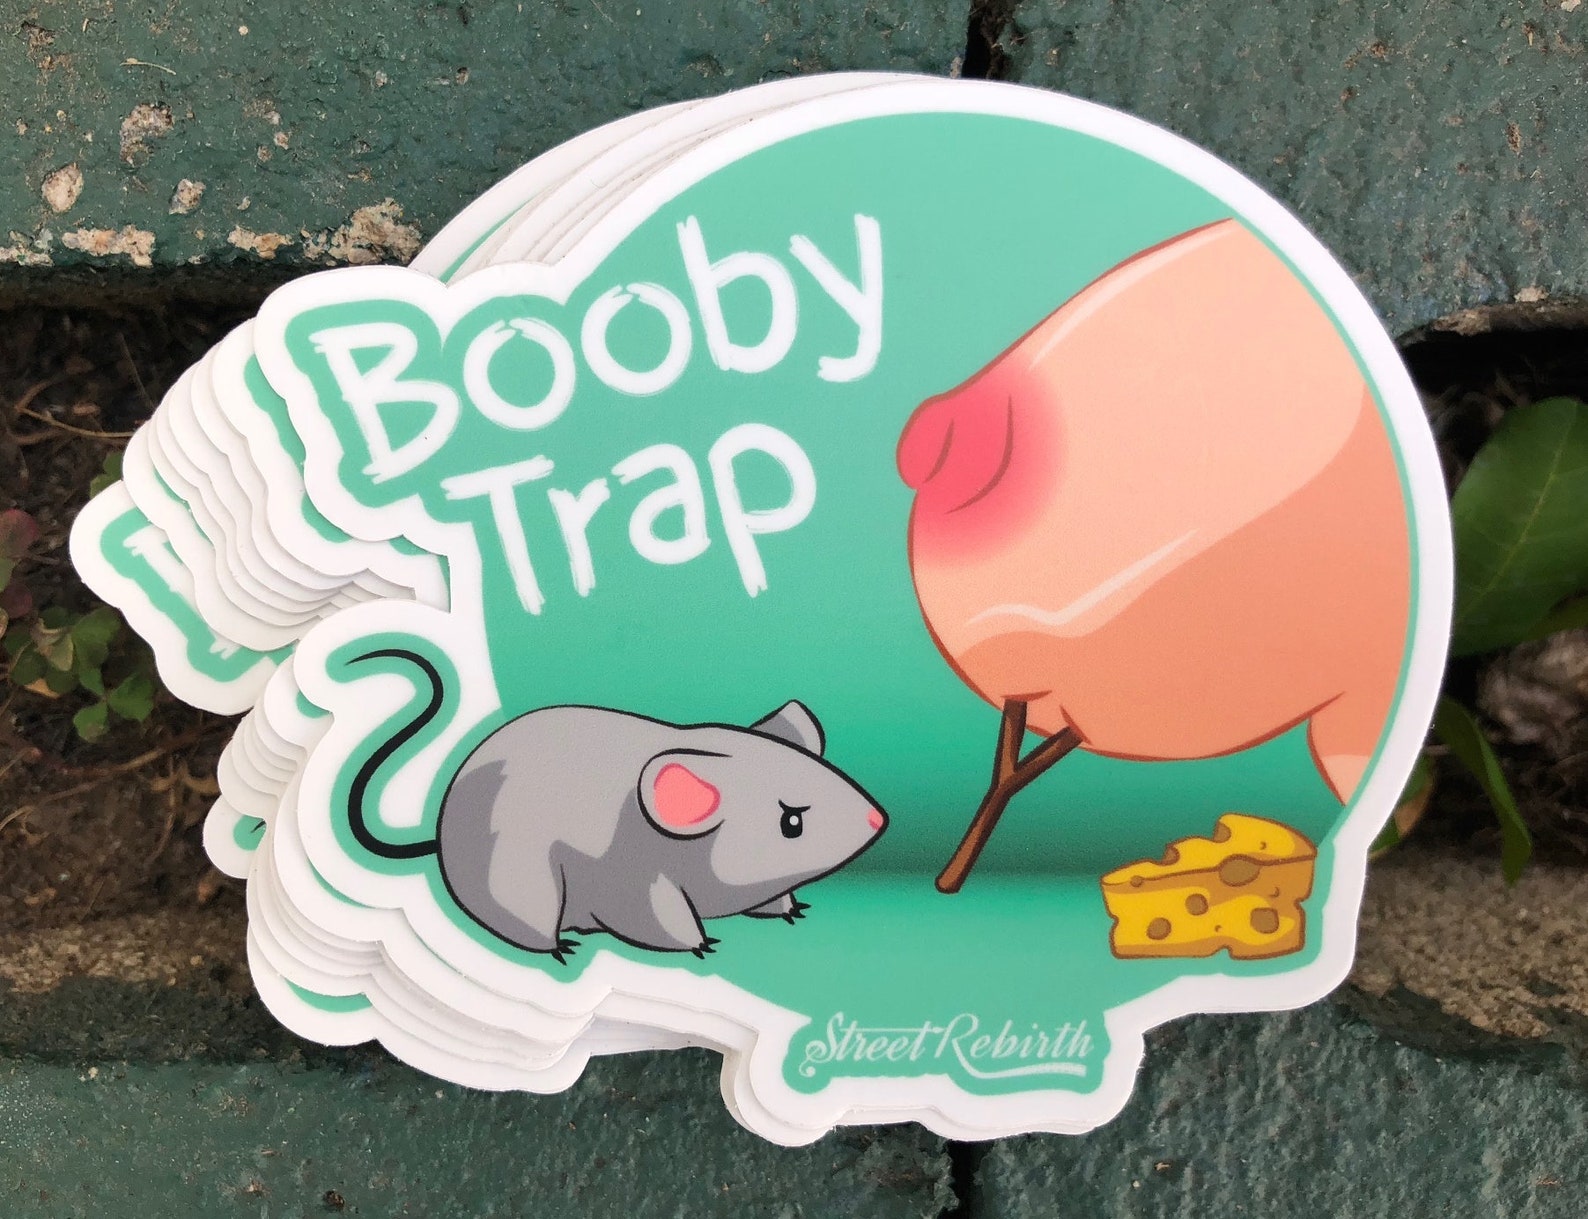 Boobie trap. Booby Trap. Bob Saget - Booby Trap. R6 Booby Trap. Трэп Стикеры.